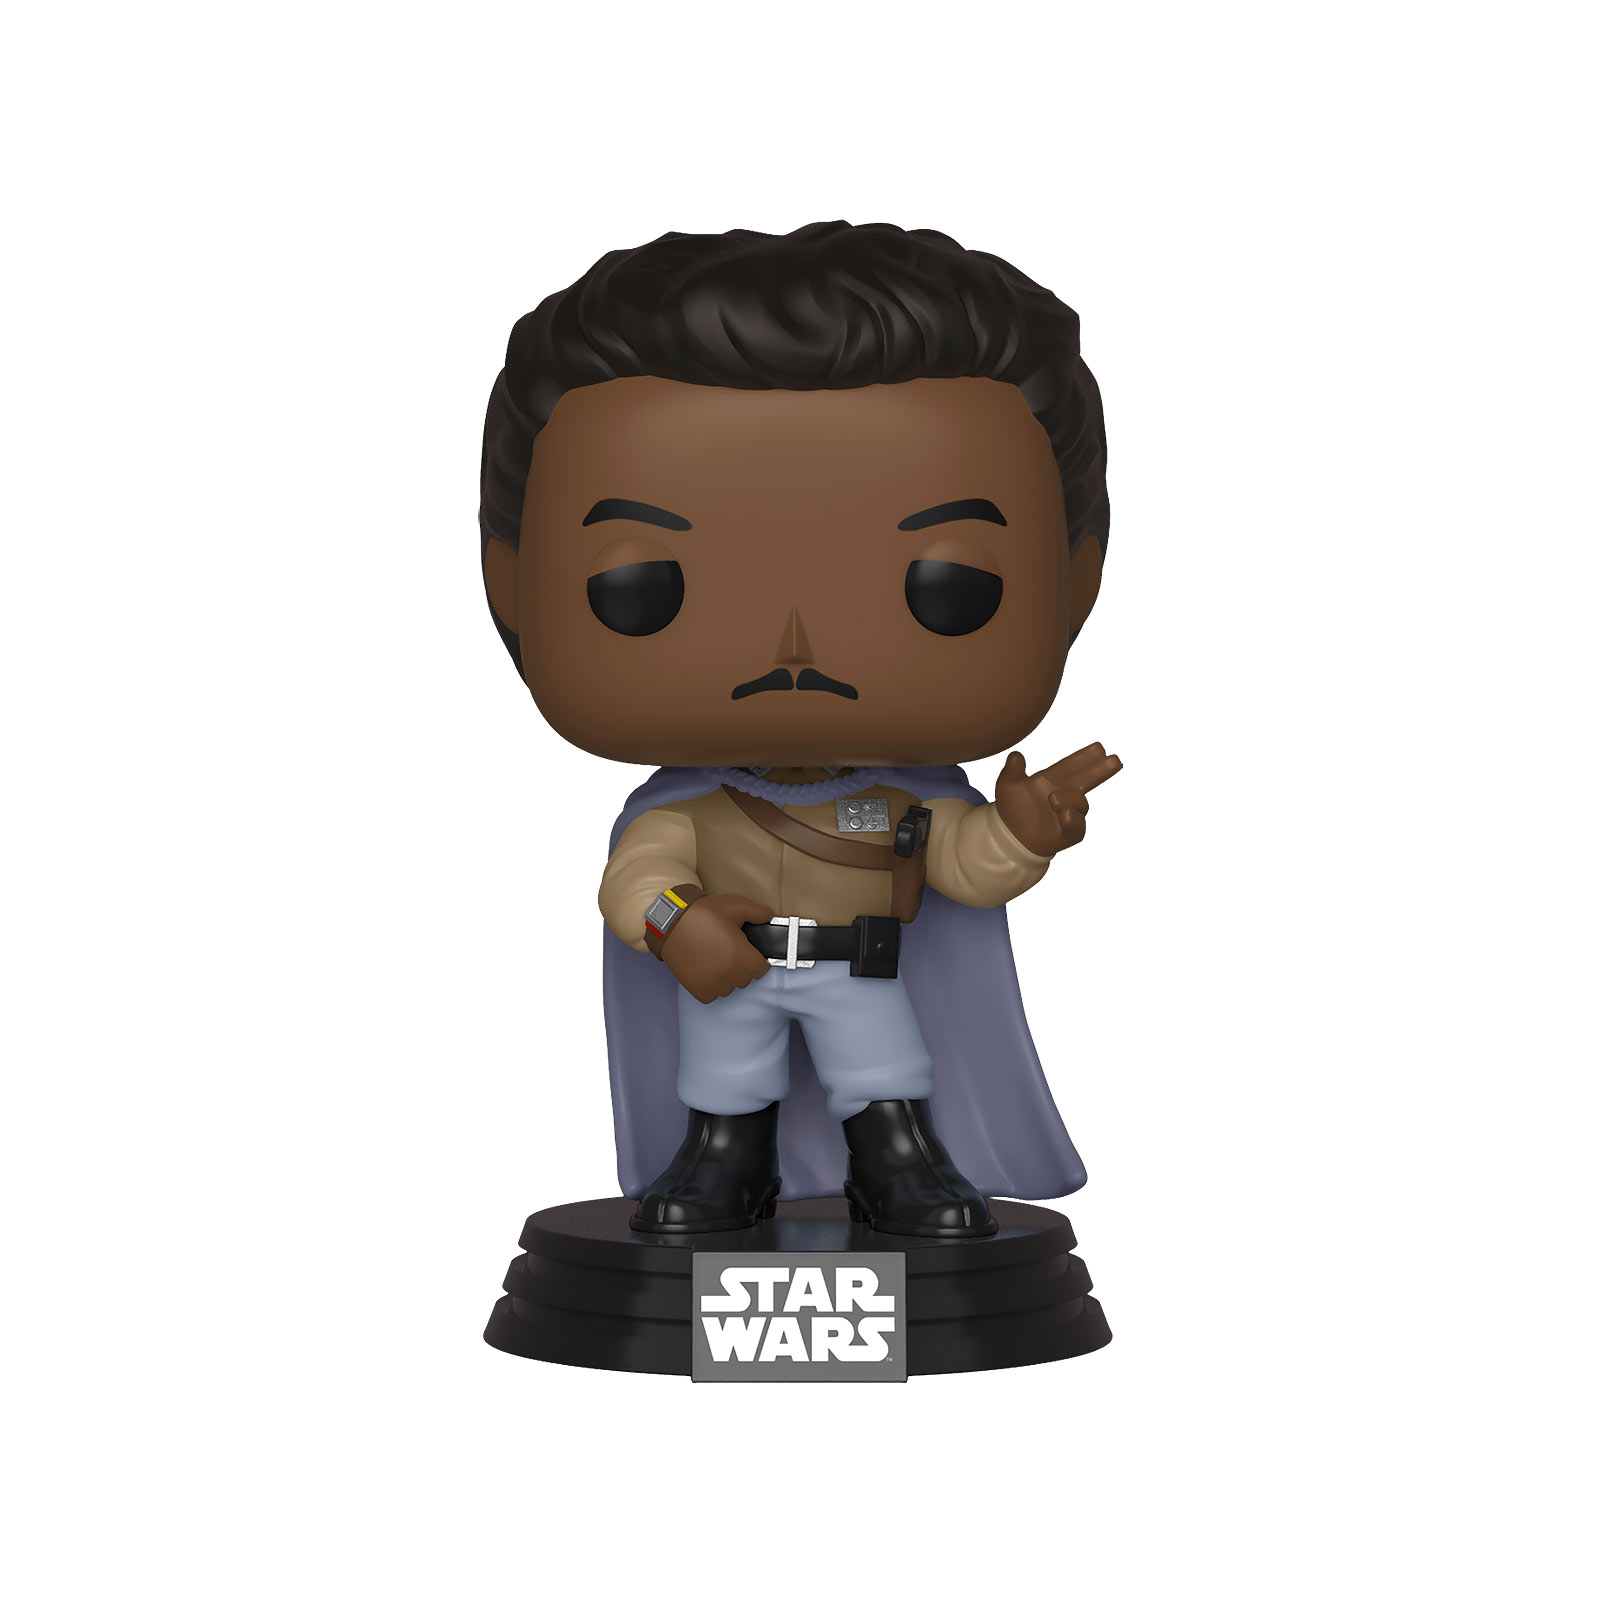 Star Wars - General Lando Calrissian Funko Pop bobblehead figure